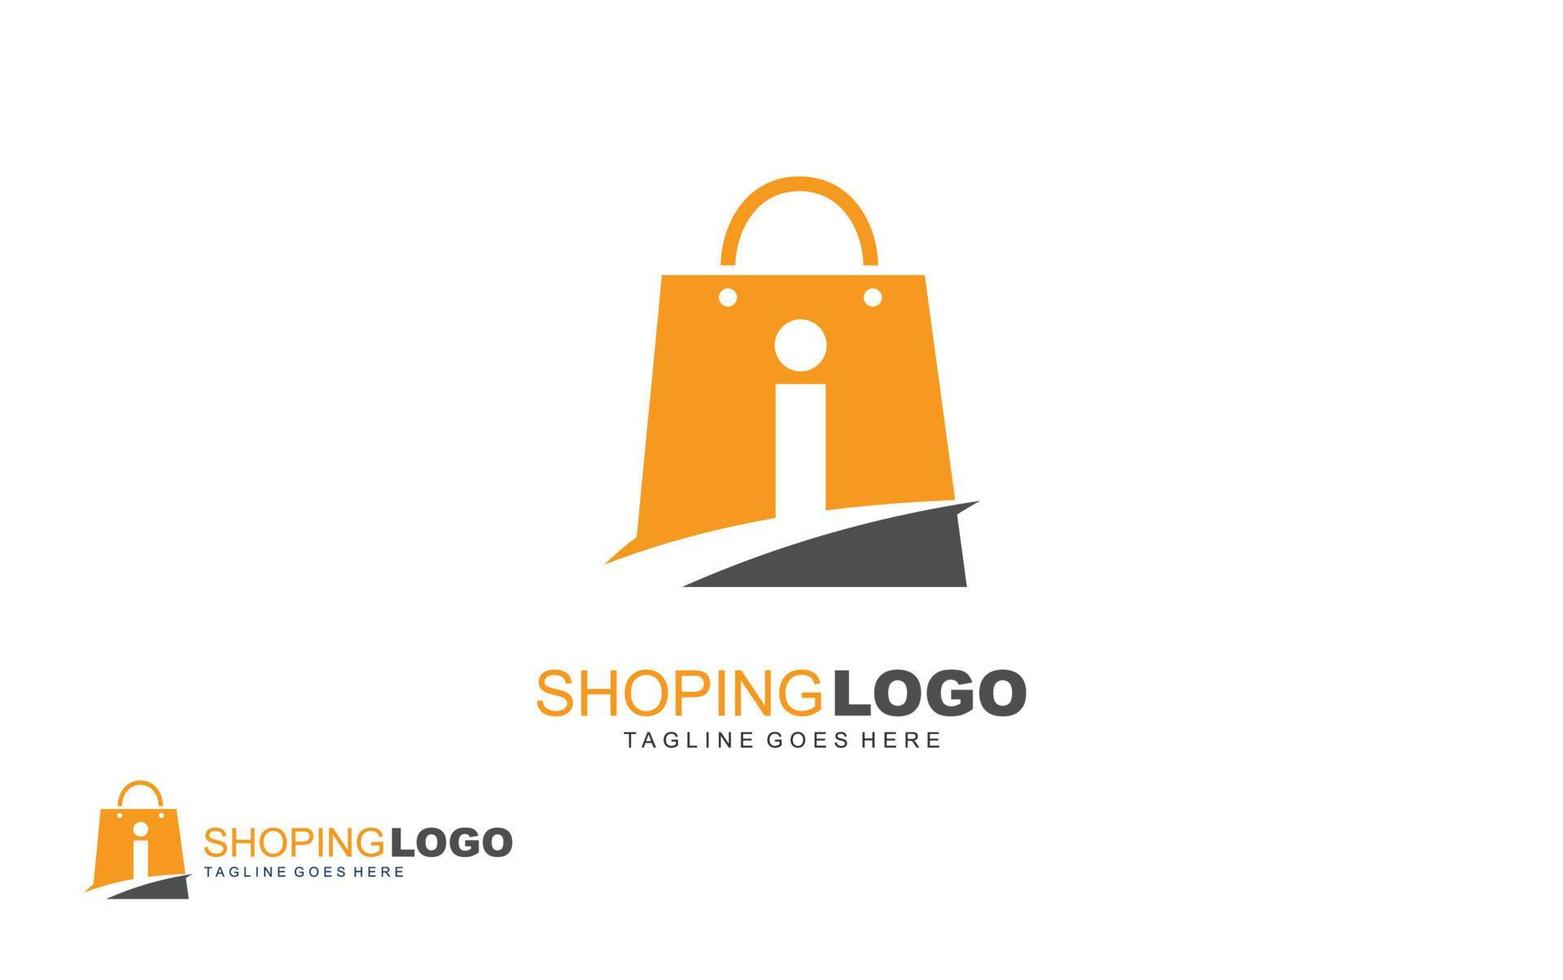 I logo ONLINESHOP for branding company. BAG template vector illustration for your brand.